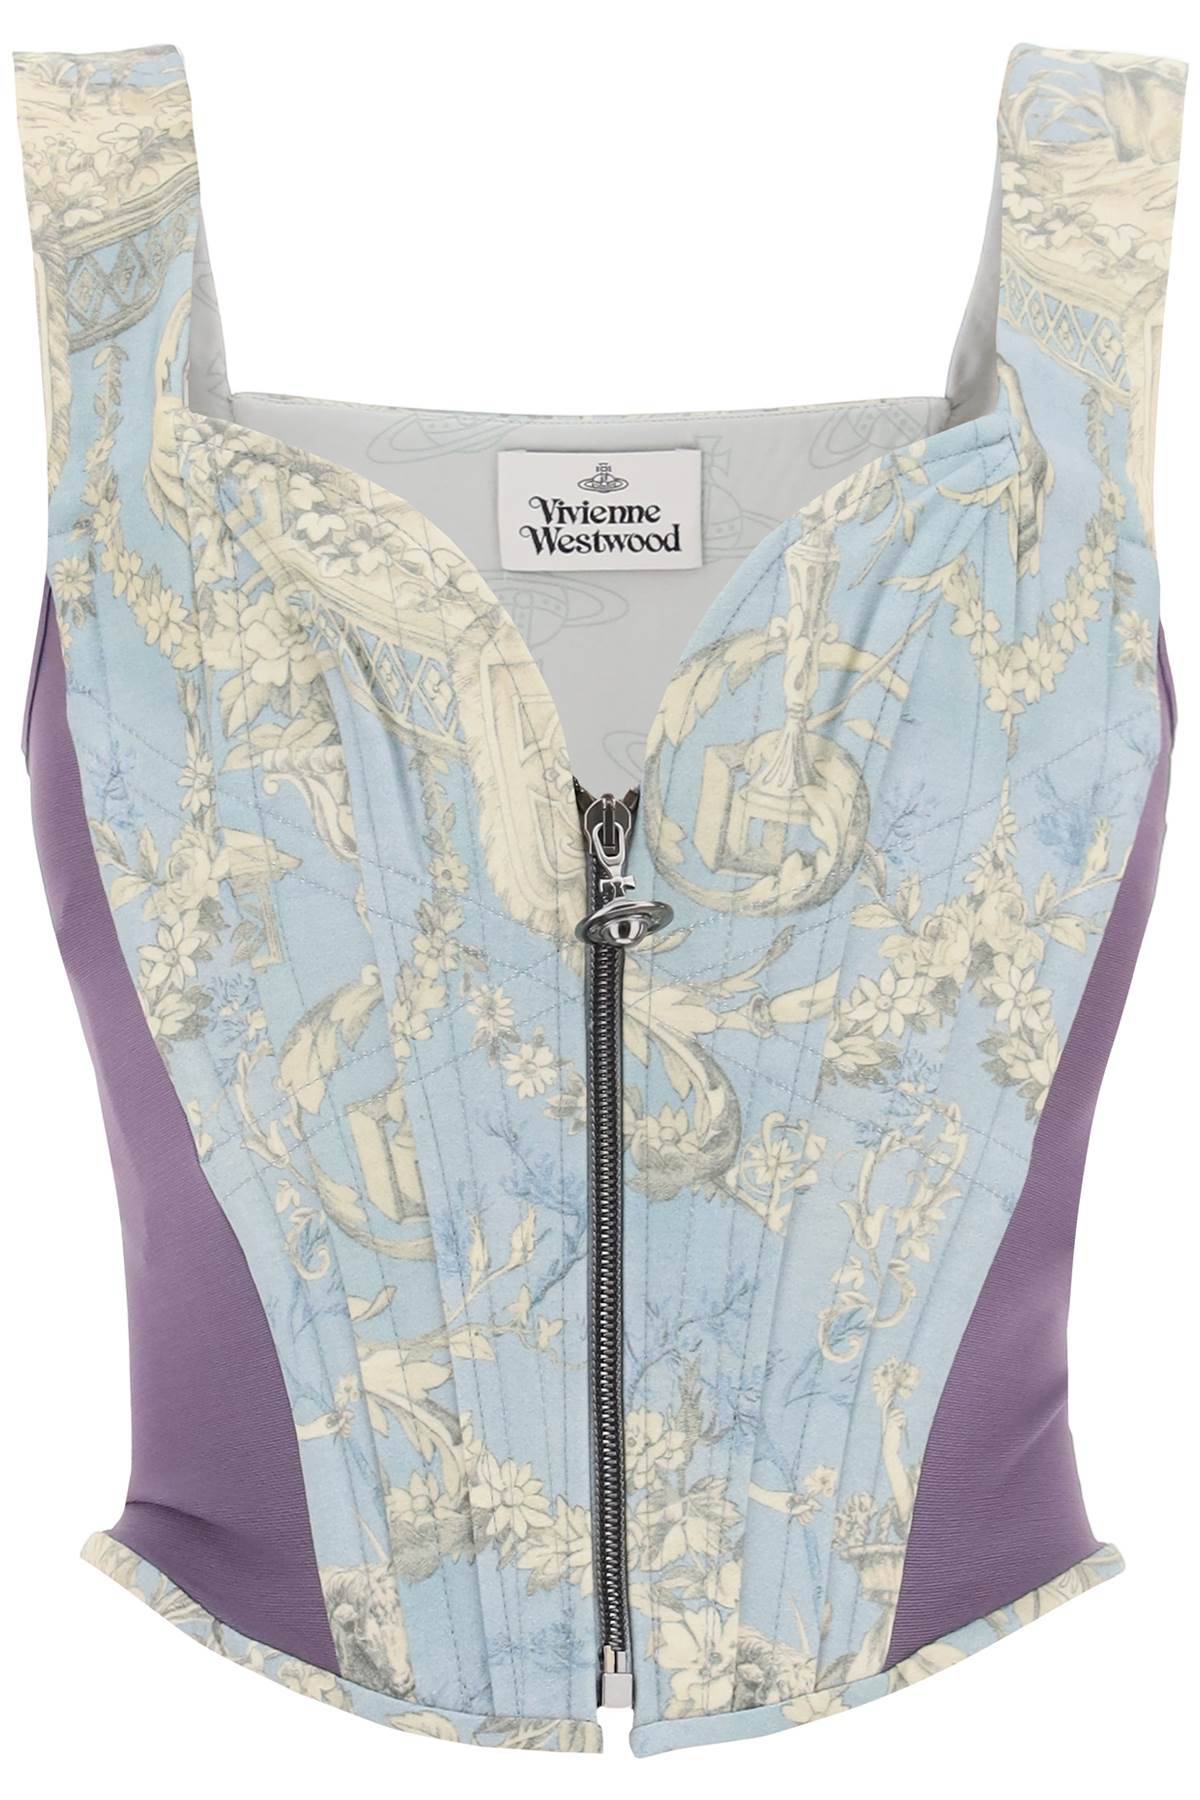 Vivienne Westwood VIVIENNE WESTWOOD classic top corset for